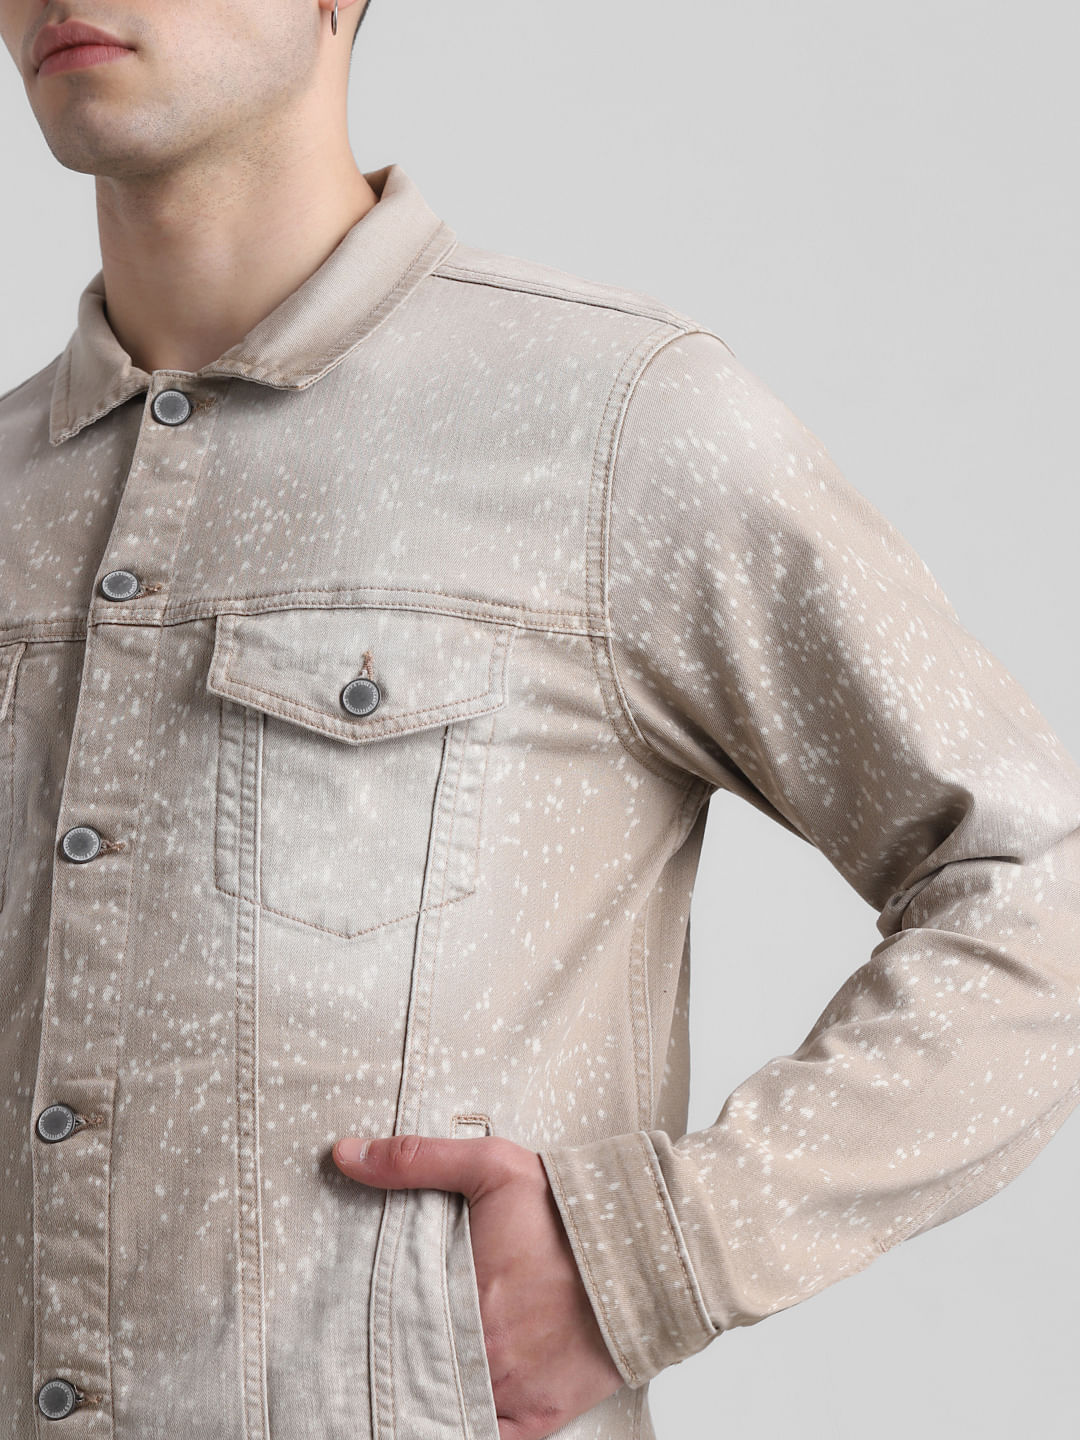 Men's TRUCKER Leather Jacket Western Classic Brown Denim Style Shirt Jacket  | eBay